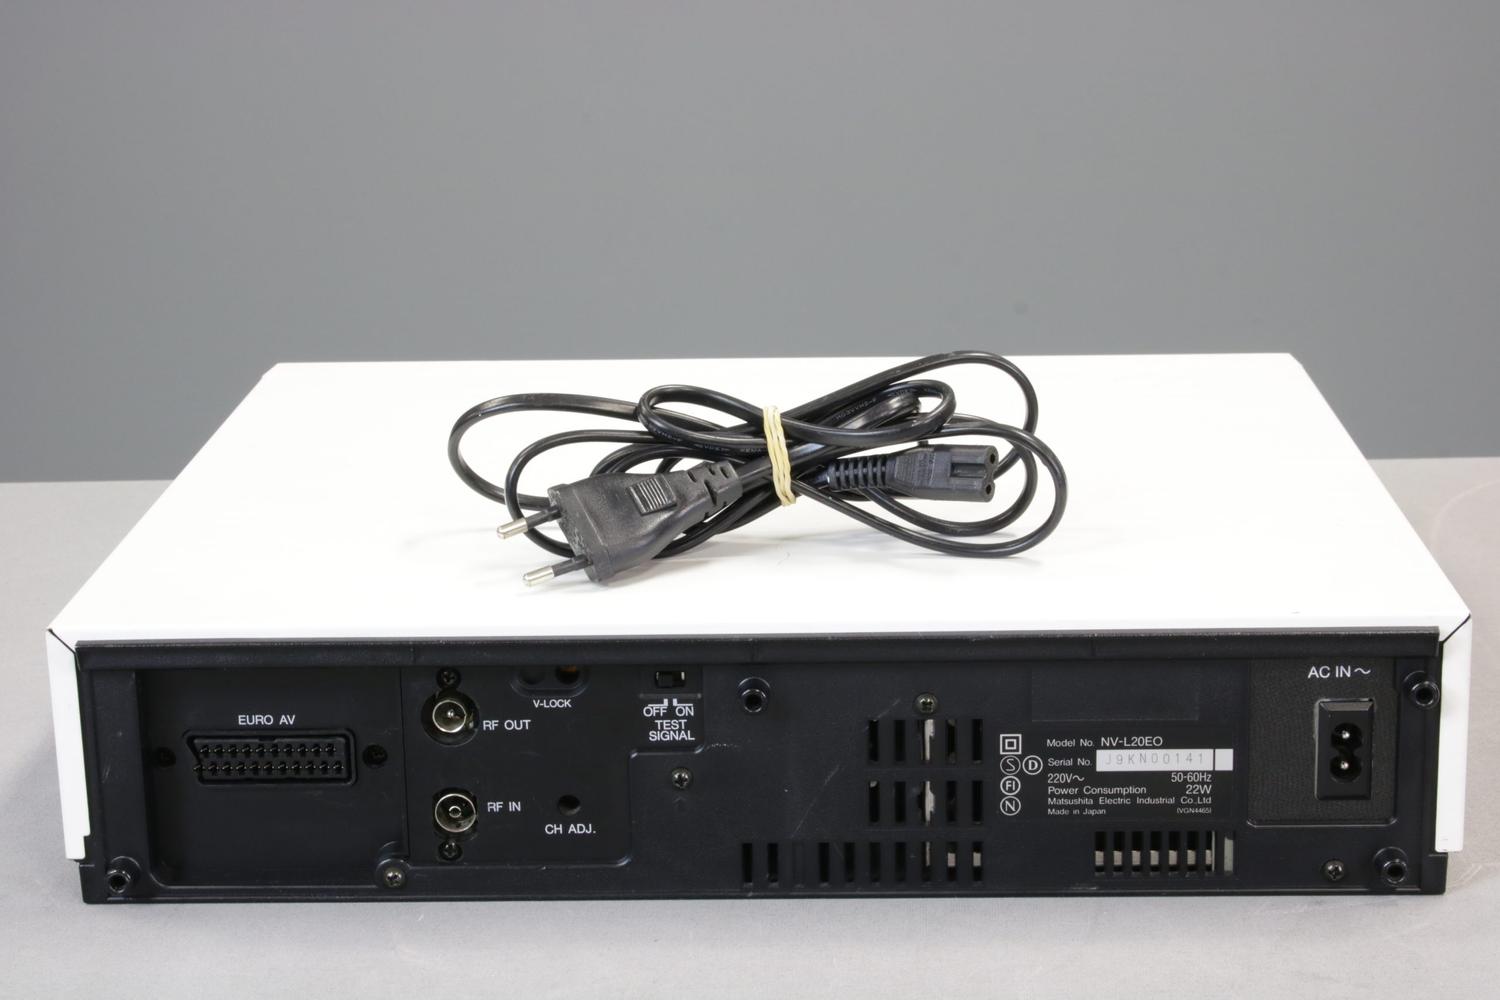 Panasonic Video Recorder NV-L20 HQ